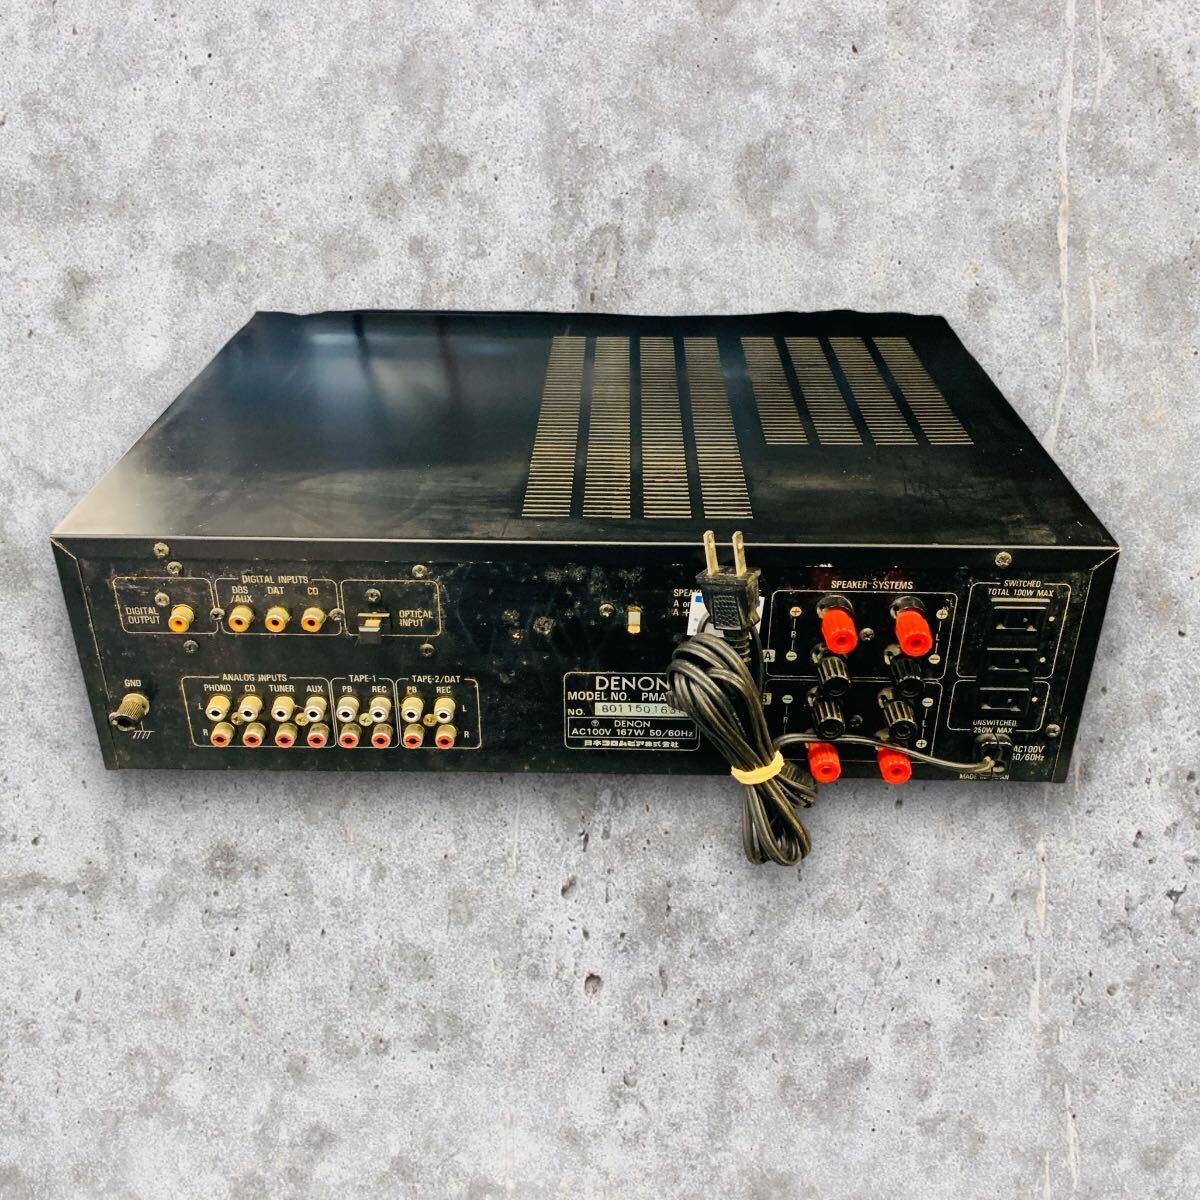 *. machine *DENON PMA-580D Denon ten on pre-main amplifier pre-amplifier digital circuit stereo amplifier audio equipment sound equipment music machinery 